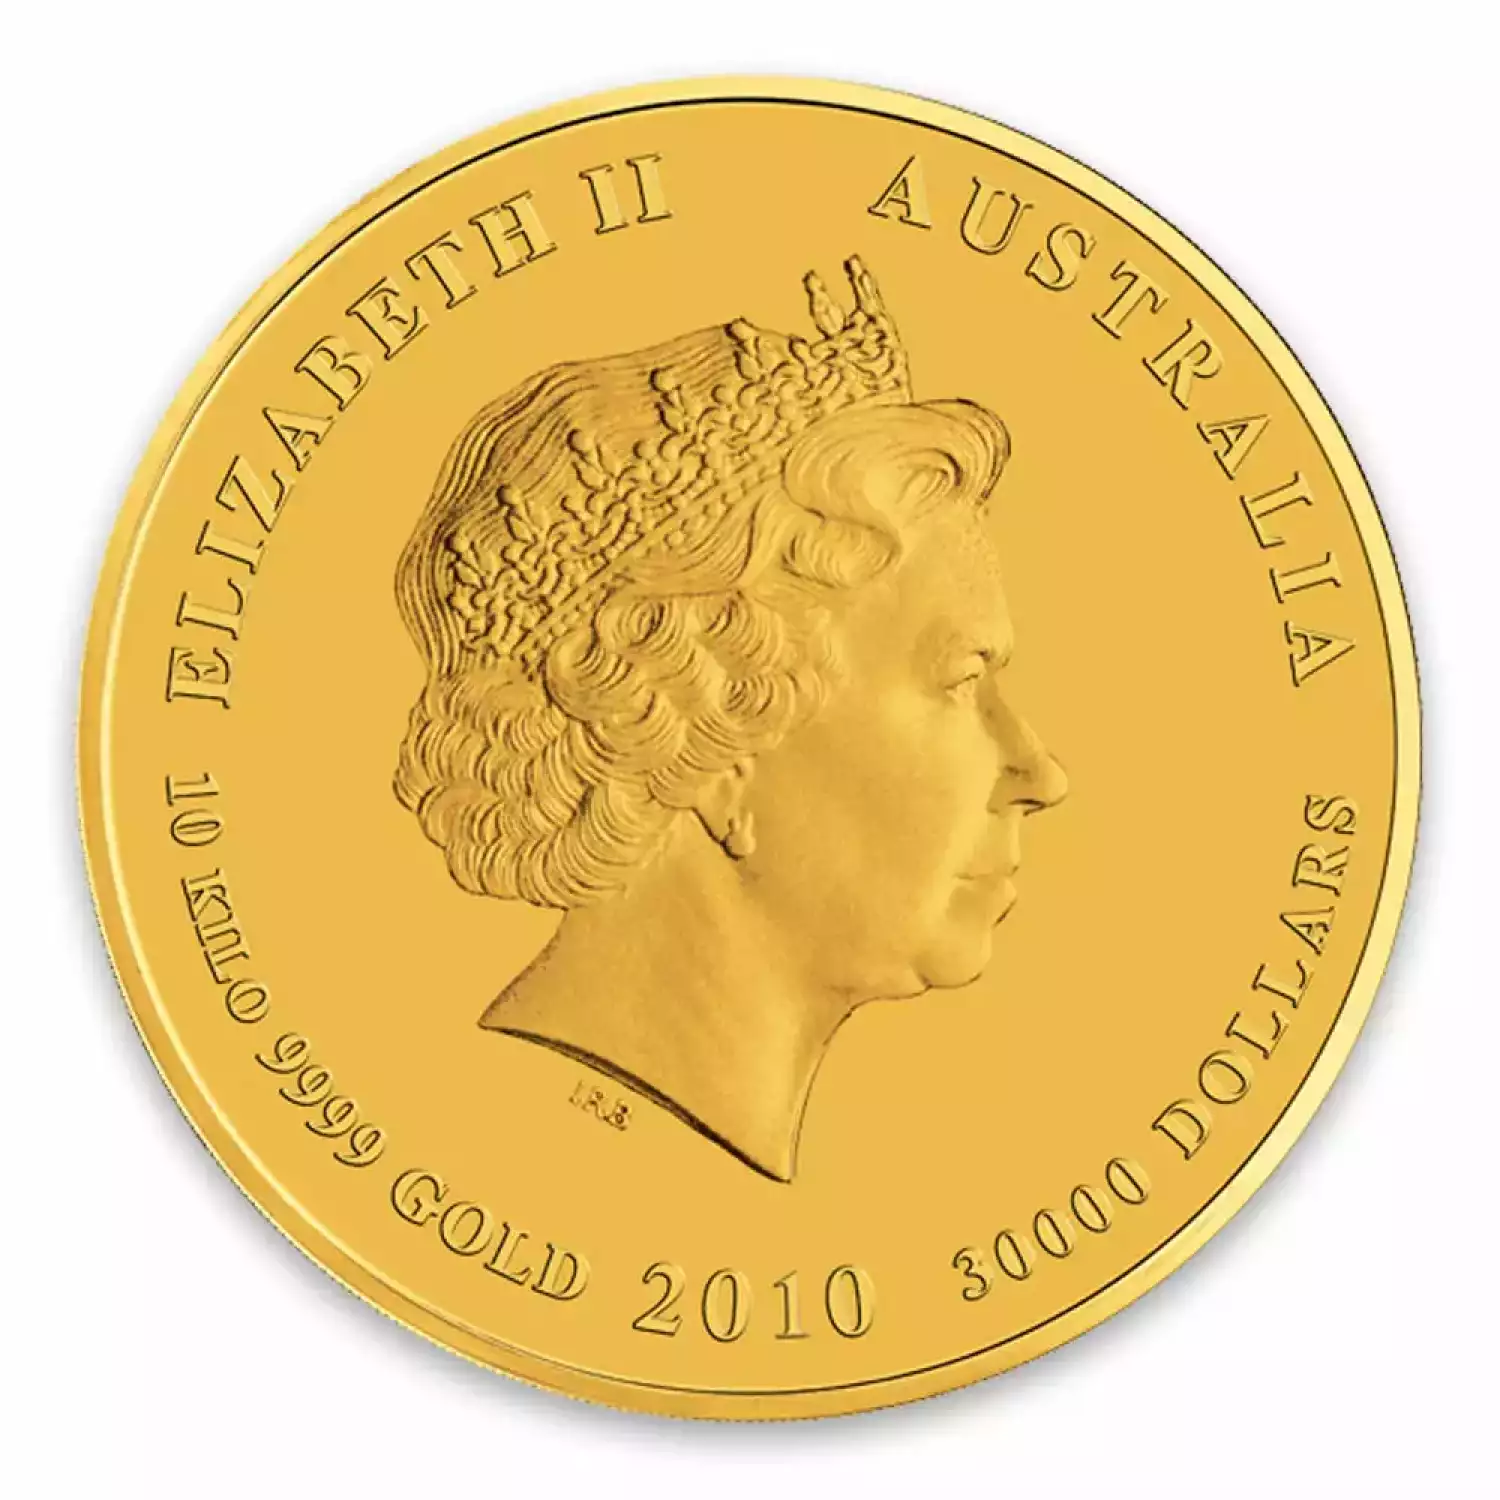 2010 10 kg Australian Perth Mint Gold Lunar II: Year of the Tiger (2)